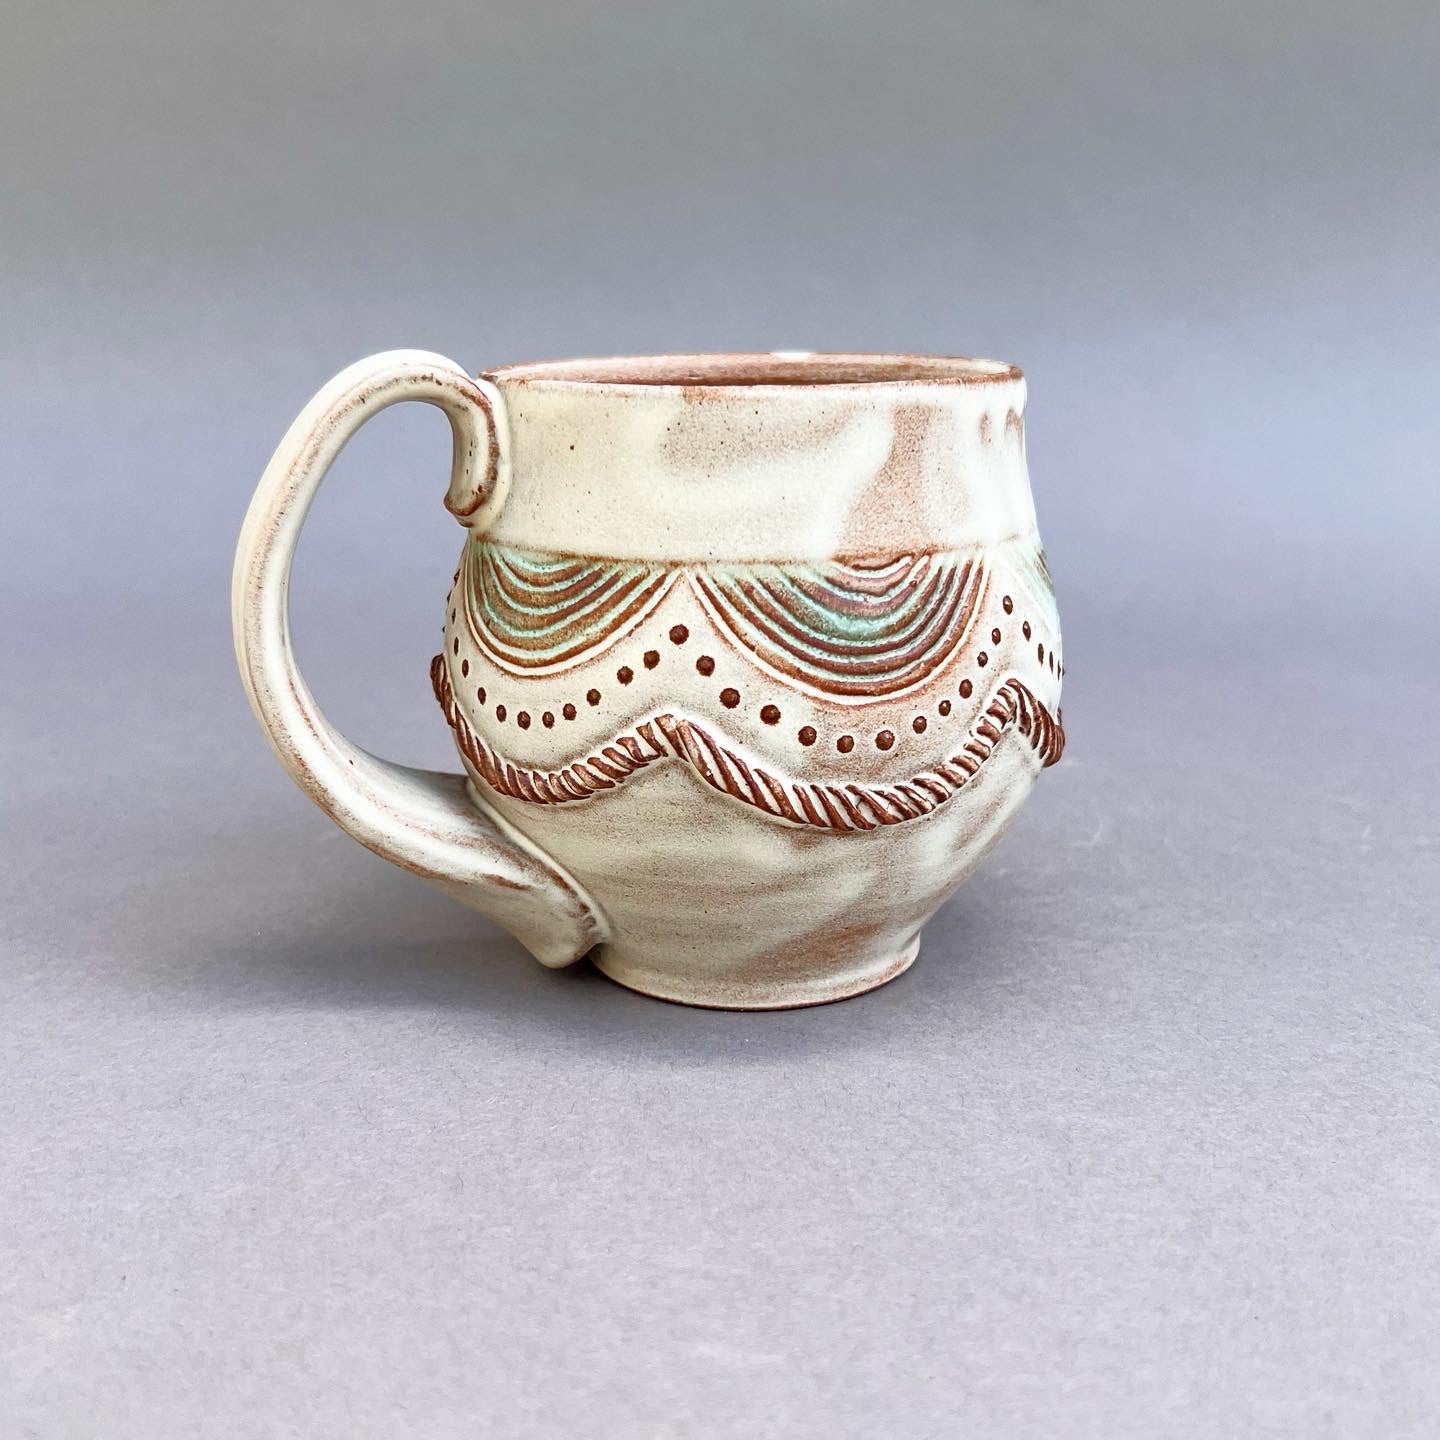 Coil Decorated Mug